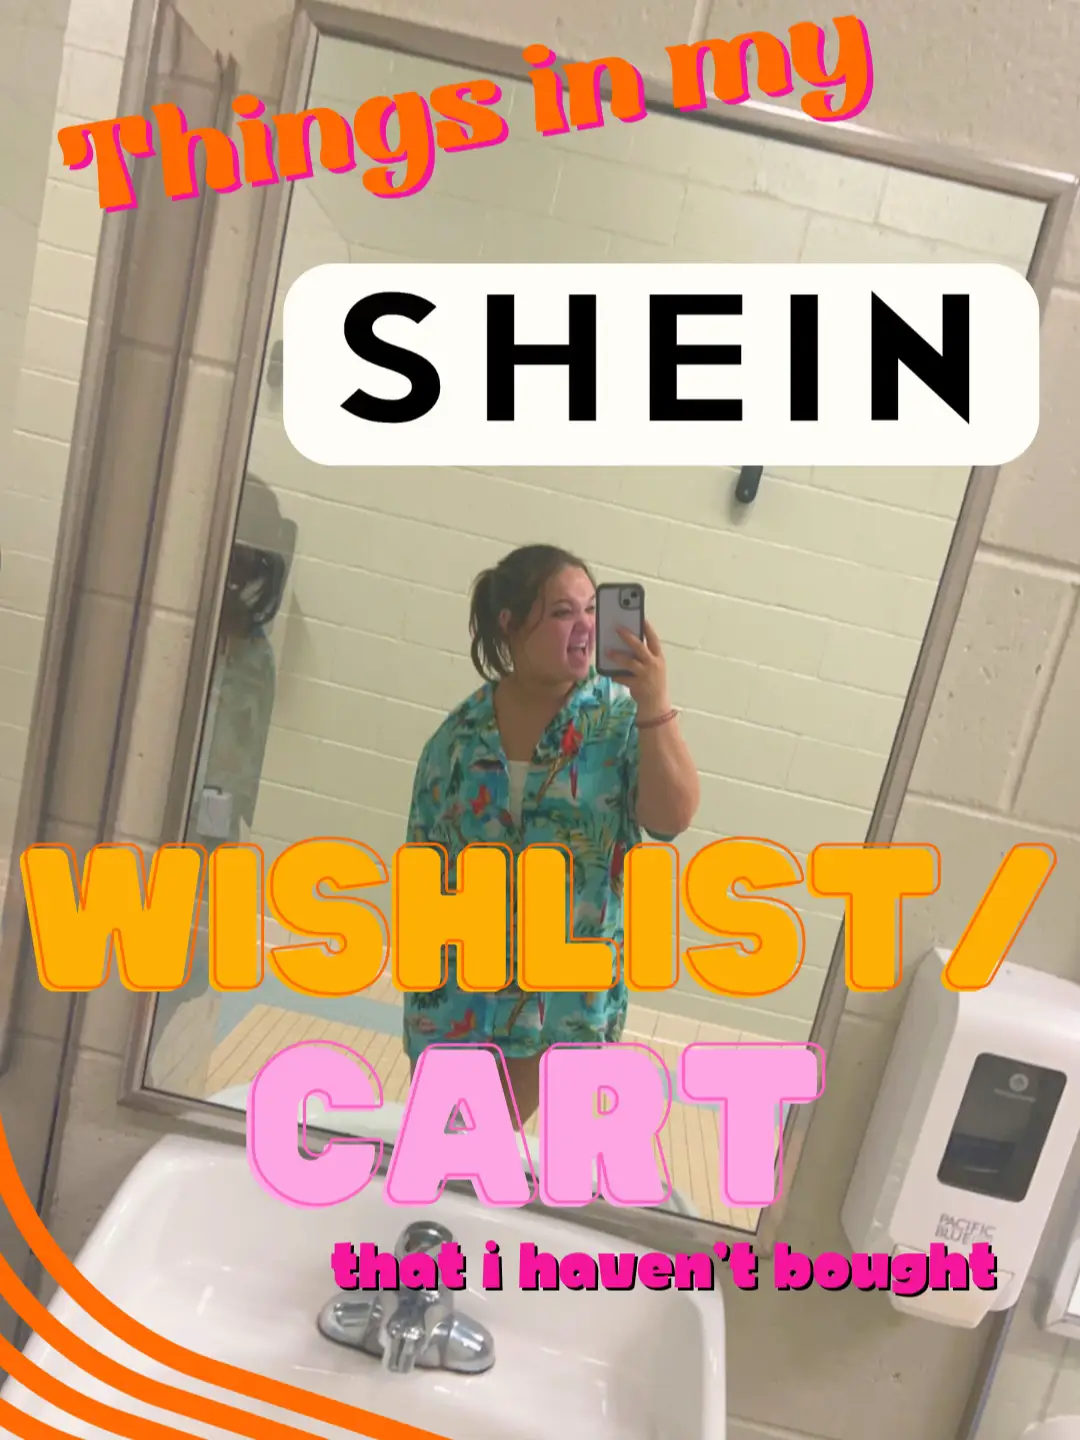 I don't like SHEIN.